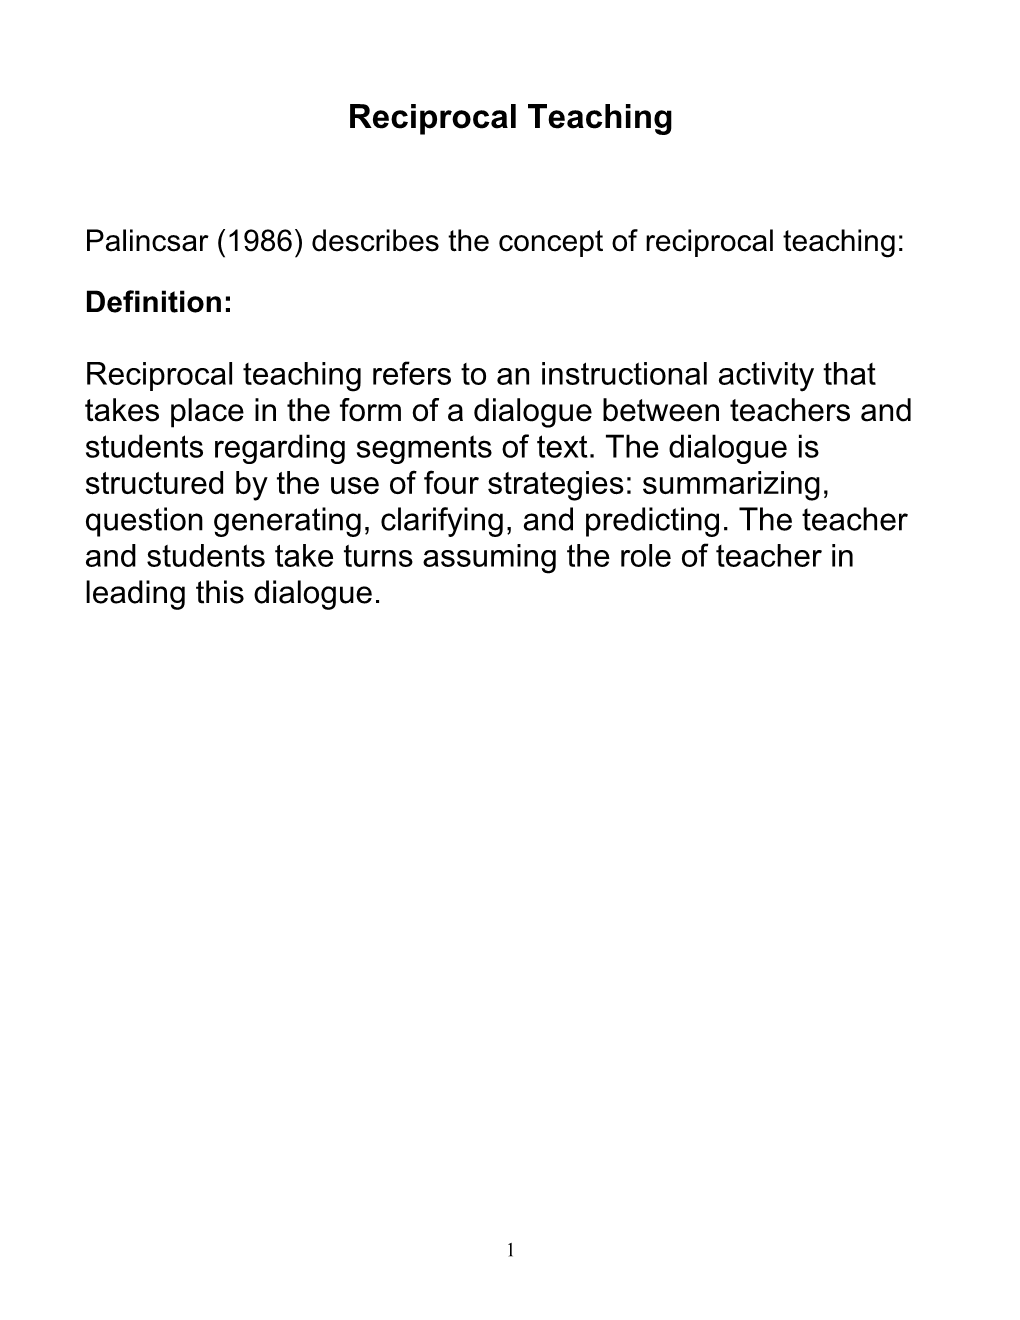 Palincsar (1986) Describes the Concept of Reciprocal Teaching